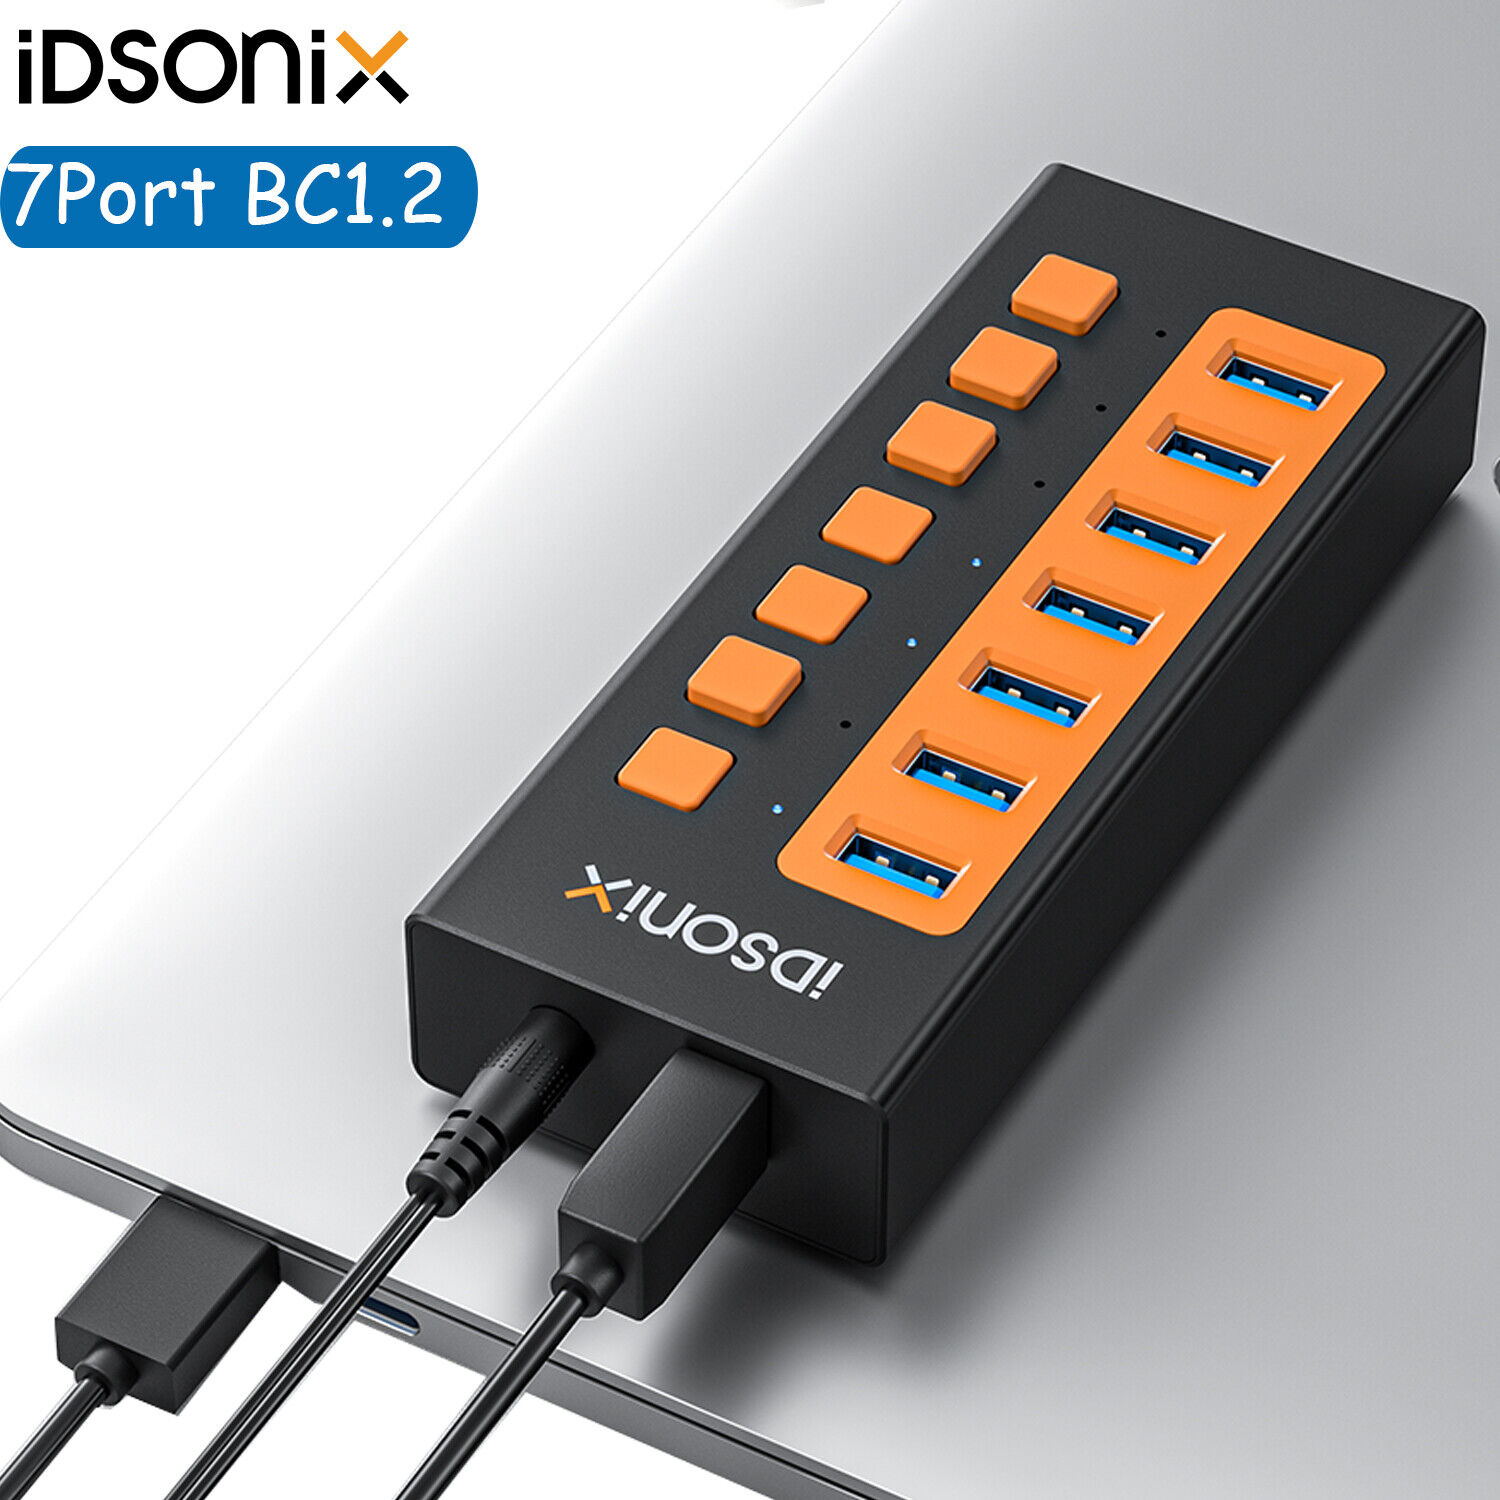 IDsonix 7Port USB 3.0 High Speed HUB+ AC Power Adapter Black + USB Cable USA